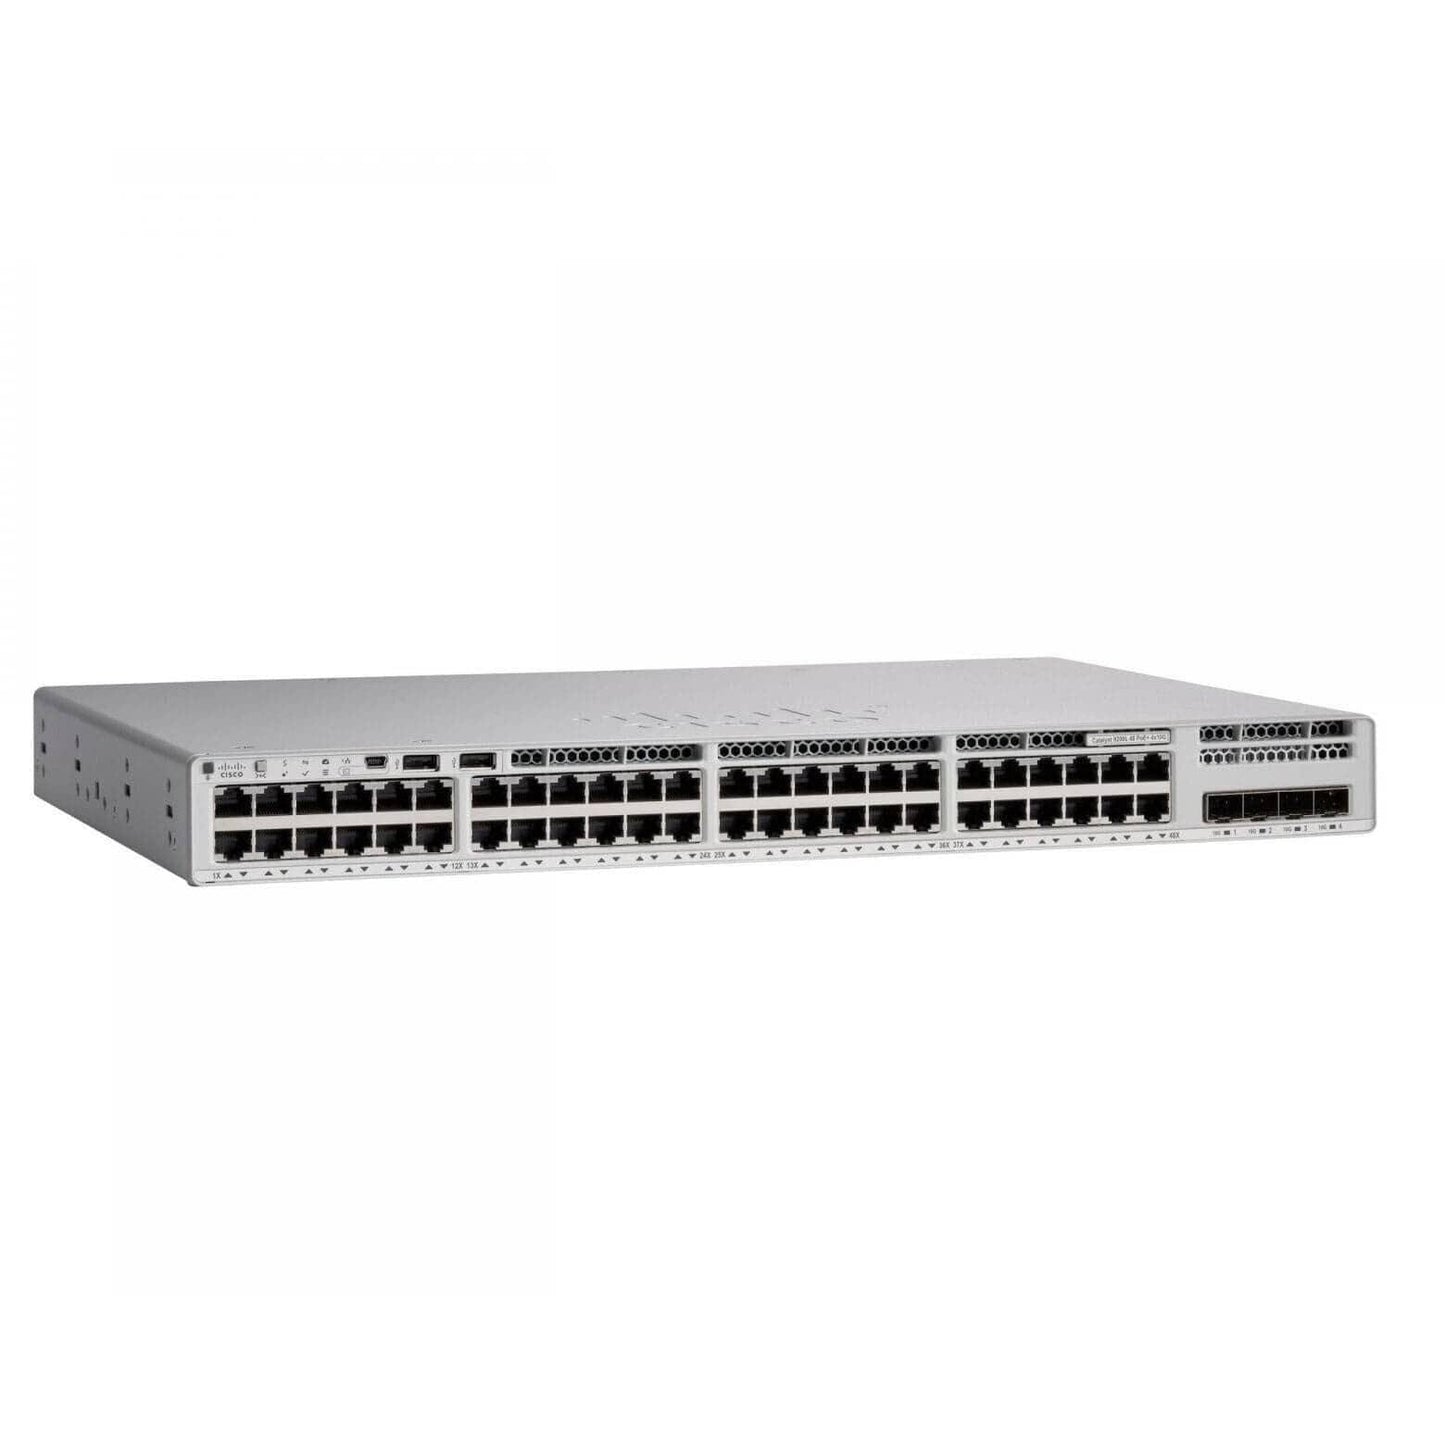 Cisco Catalyst 9200L 48-port partial PoE+ 4x10G uplink Switch, Network Advantage - C9200L-48PL-4X-A Refurbished - C9200L-48PL-4X-A-R - Reef Telecom